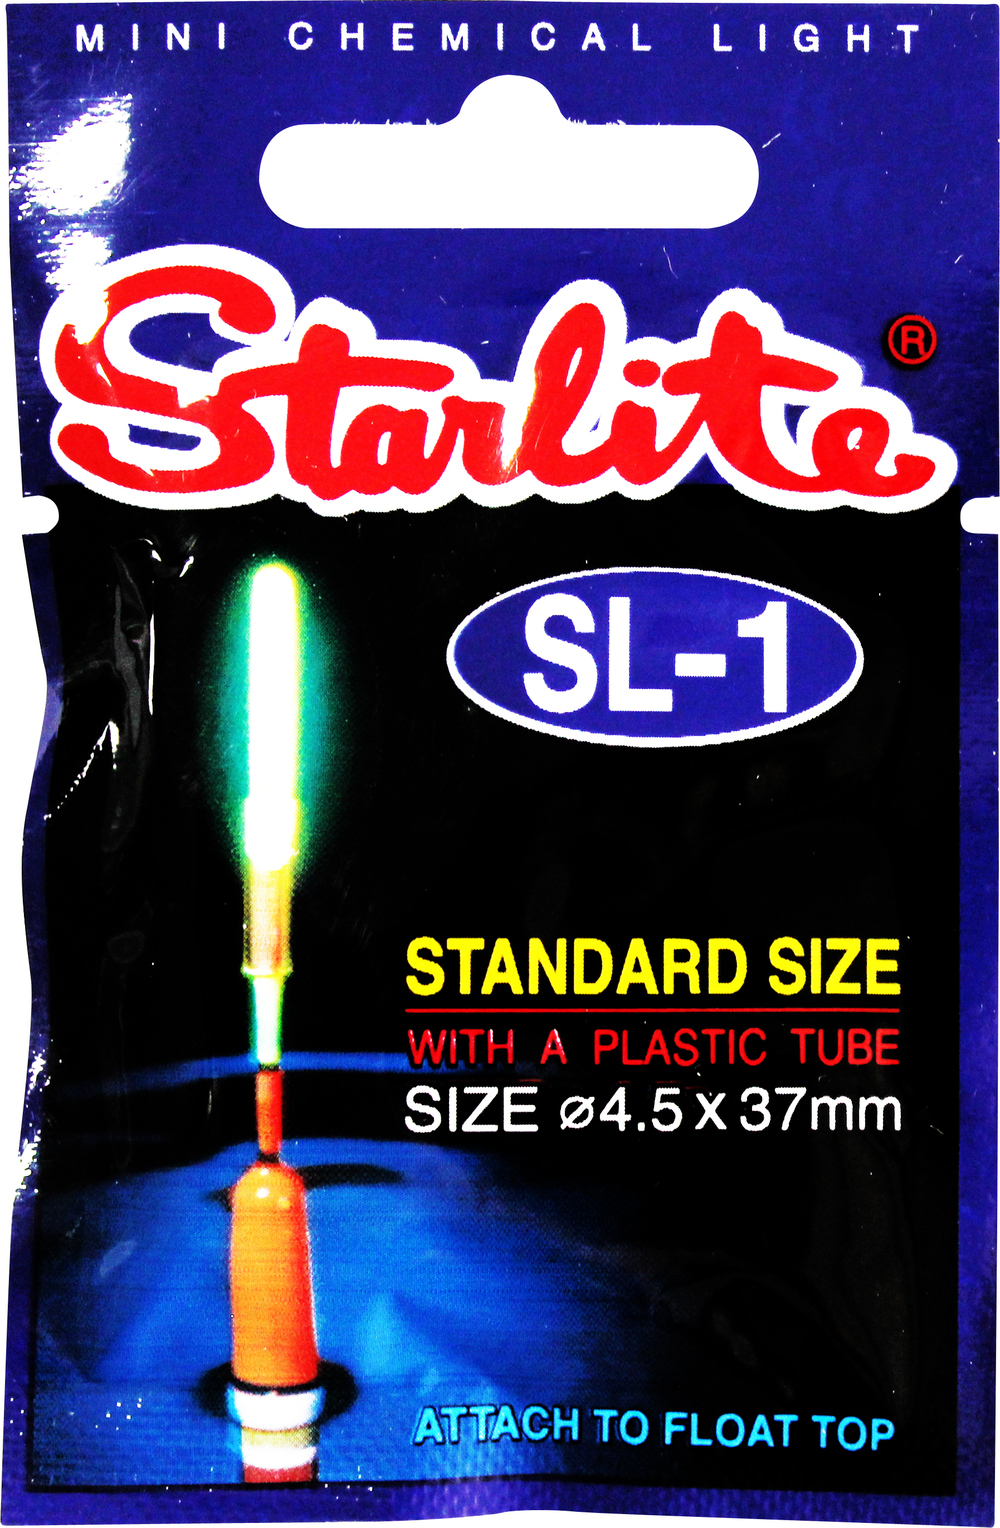 37mm Starlite Chemical Fishing Light with Tube - SL-1 Fluoro Glow